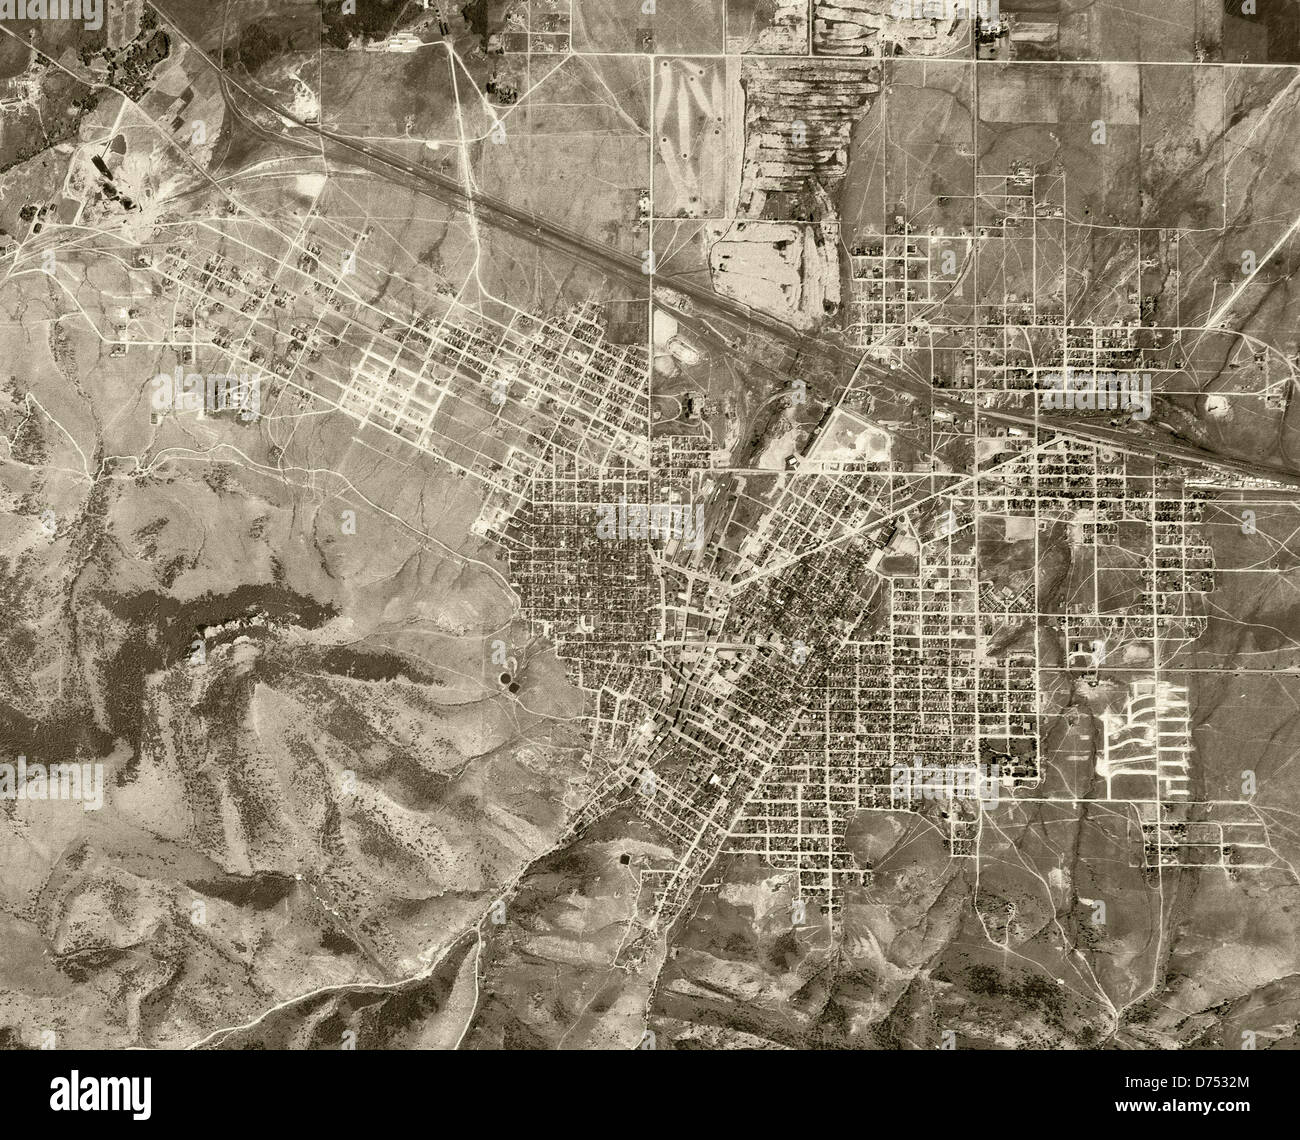 historical aerial photograph Helena, Montana 1947 Stock Photo